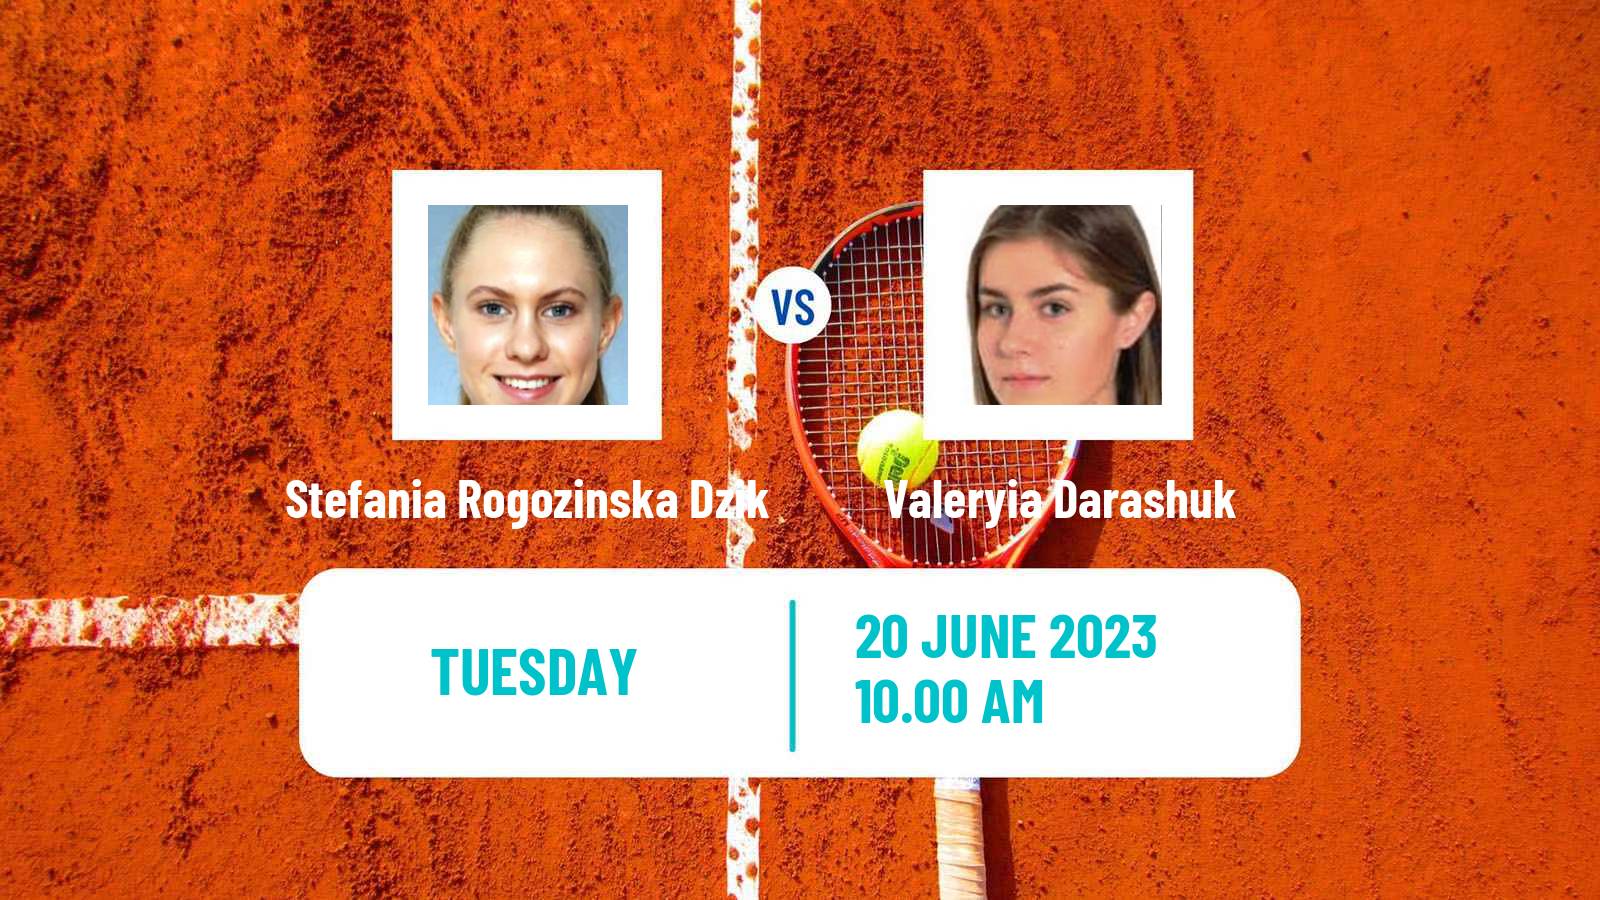 Tennis ITF W15 Gdansk Women Stefania Rogozinska Dzik - Valeryia Darashuk